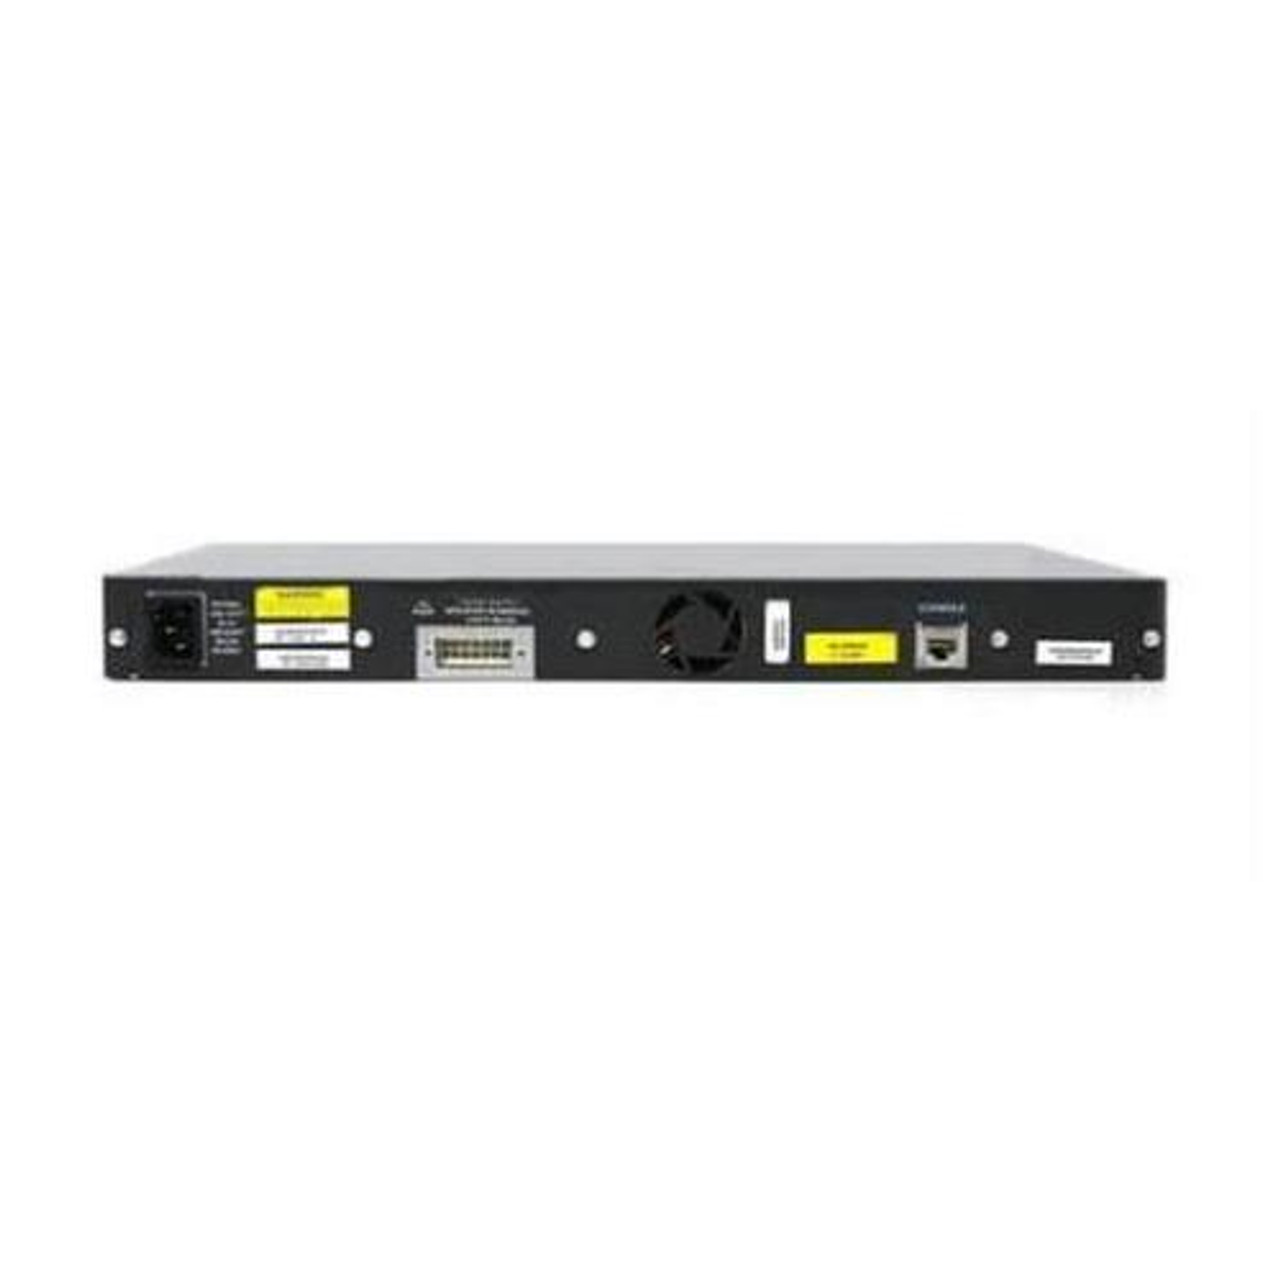 Cisco SG350-10P 10-Port Gigabit Ethernet Switch with PoE